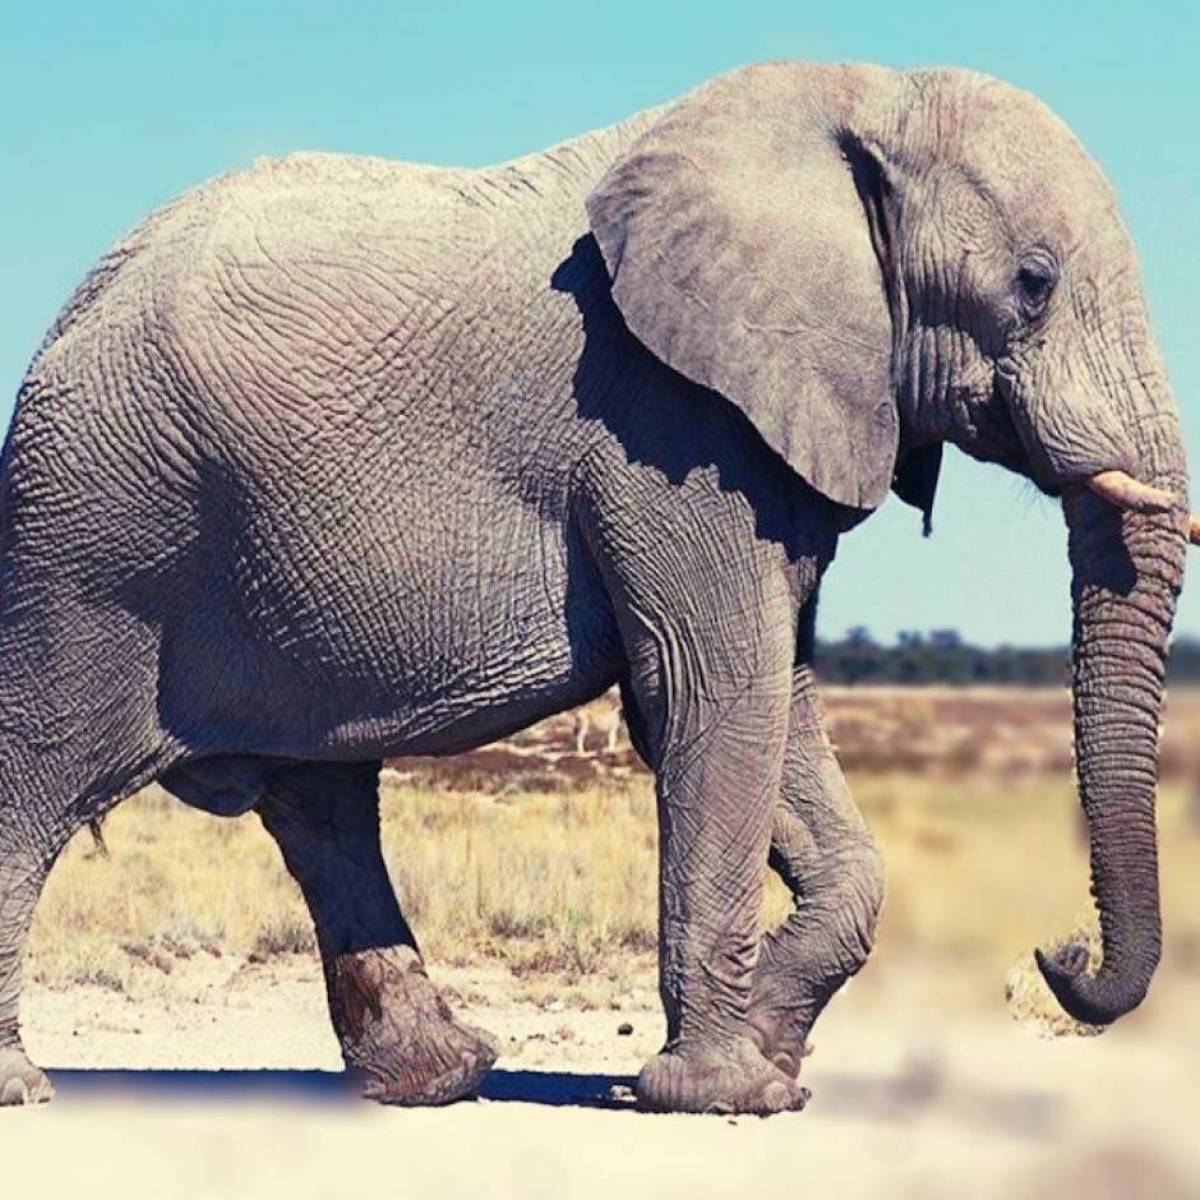 Elephant present. Слон. Слон фото. Слон в России. Слоны в России.